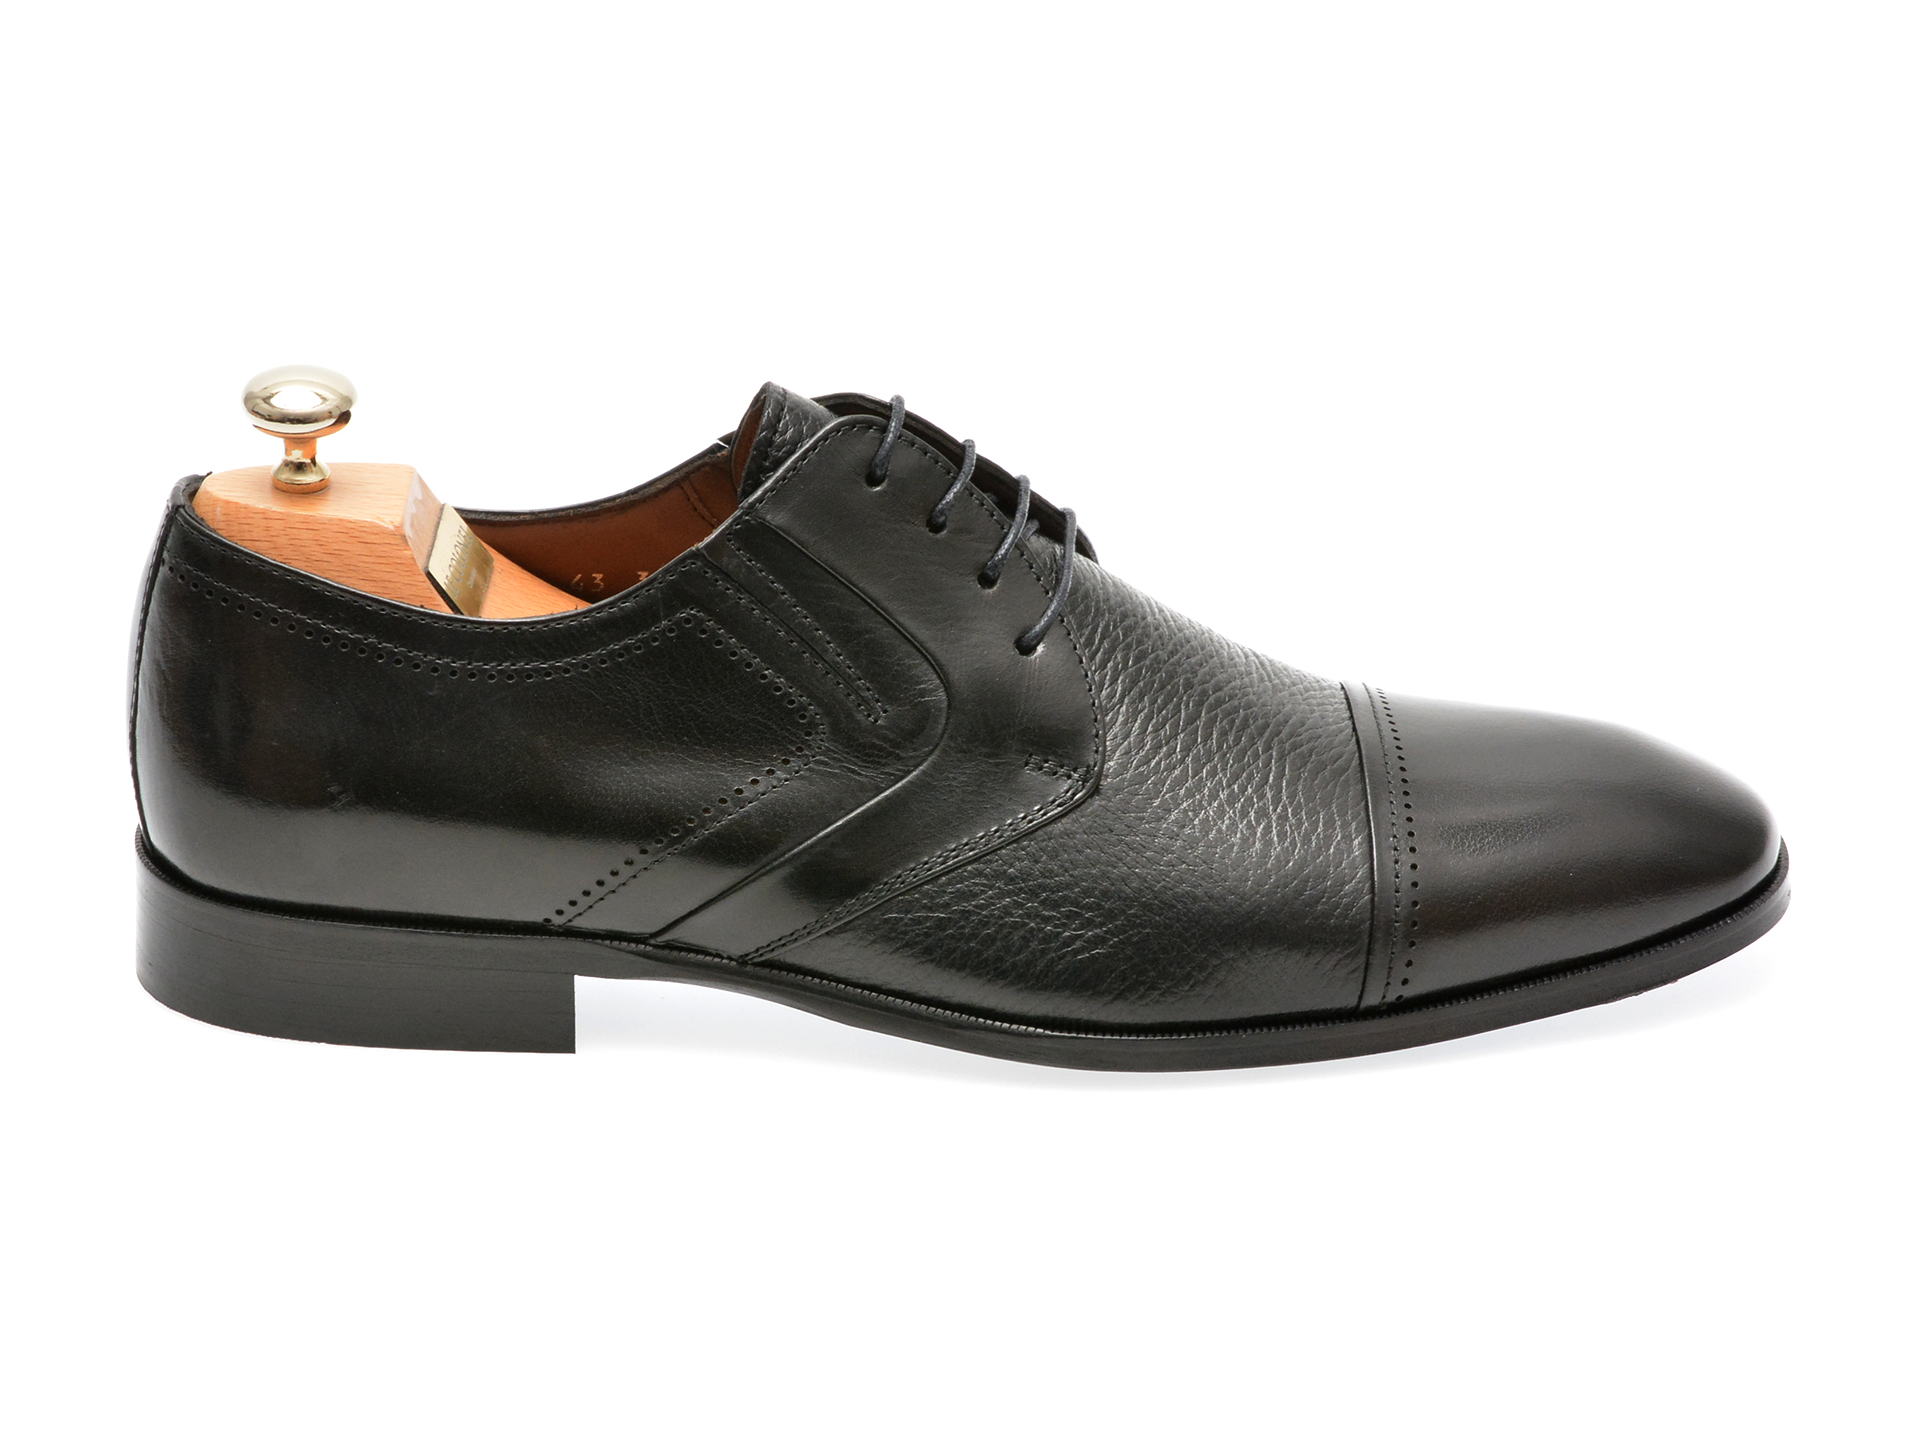 Pantofi eleganti LE COLONEL negri, 487951, din piele naturala